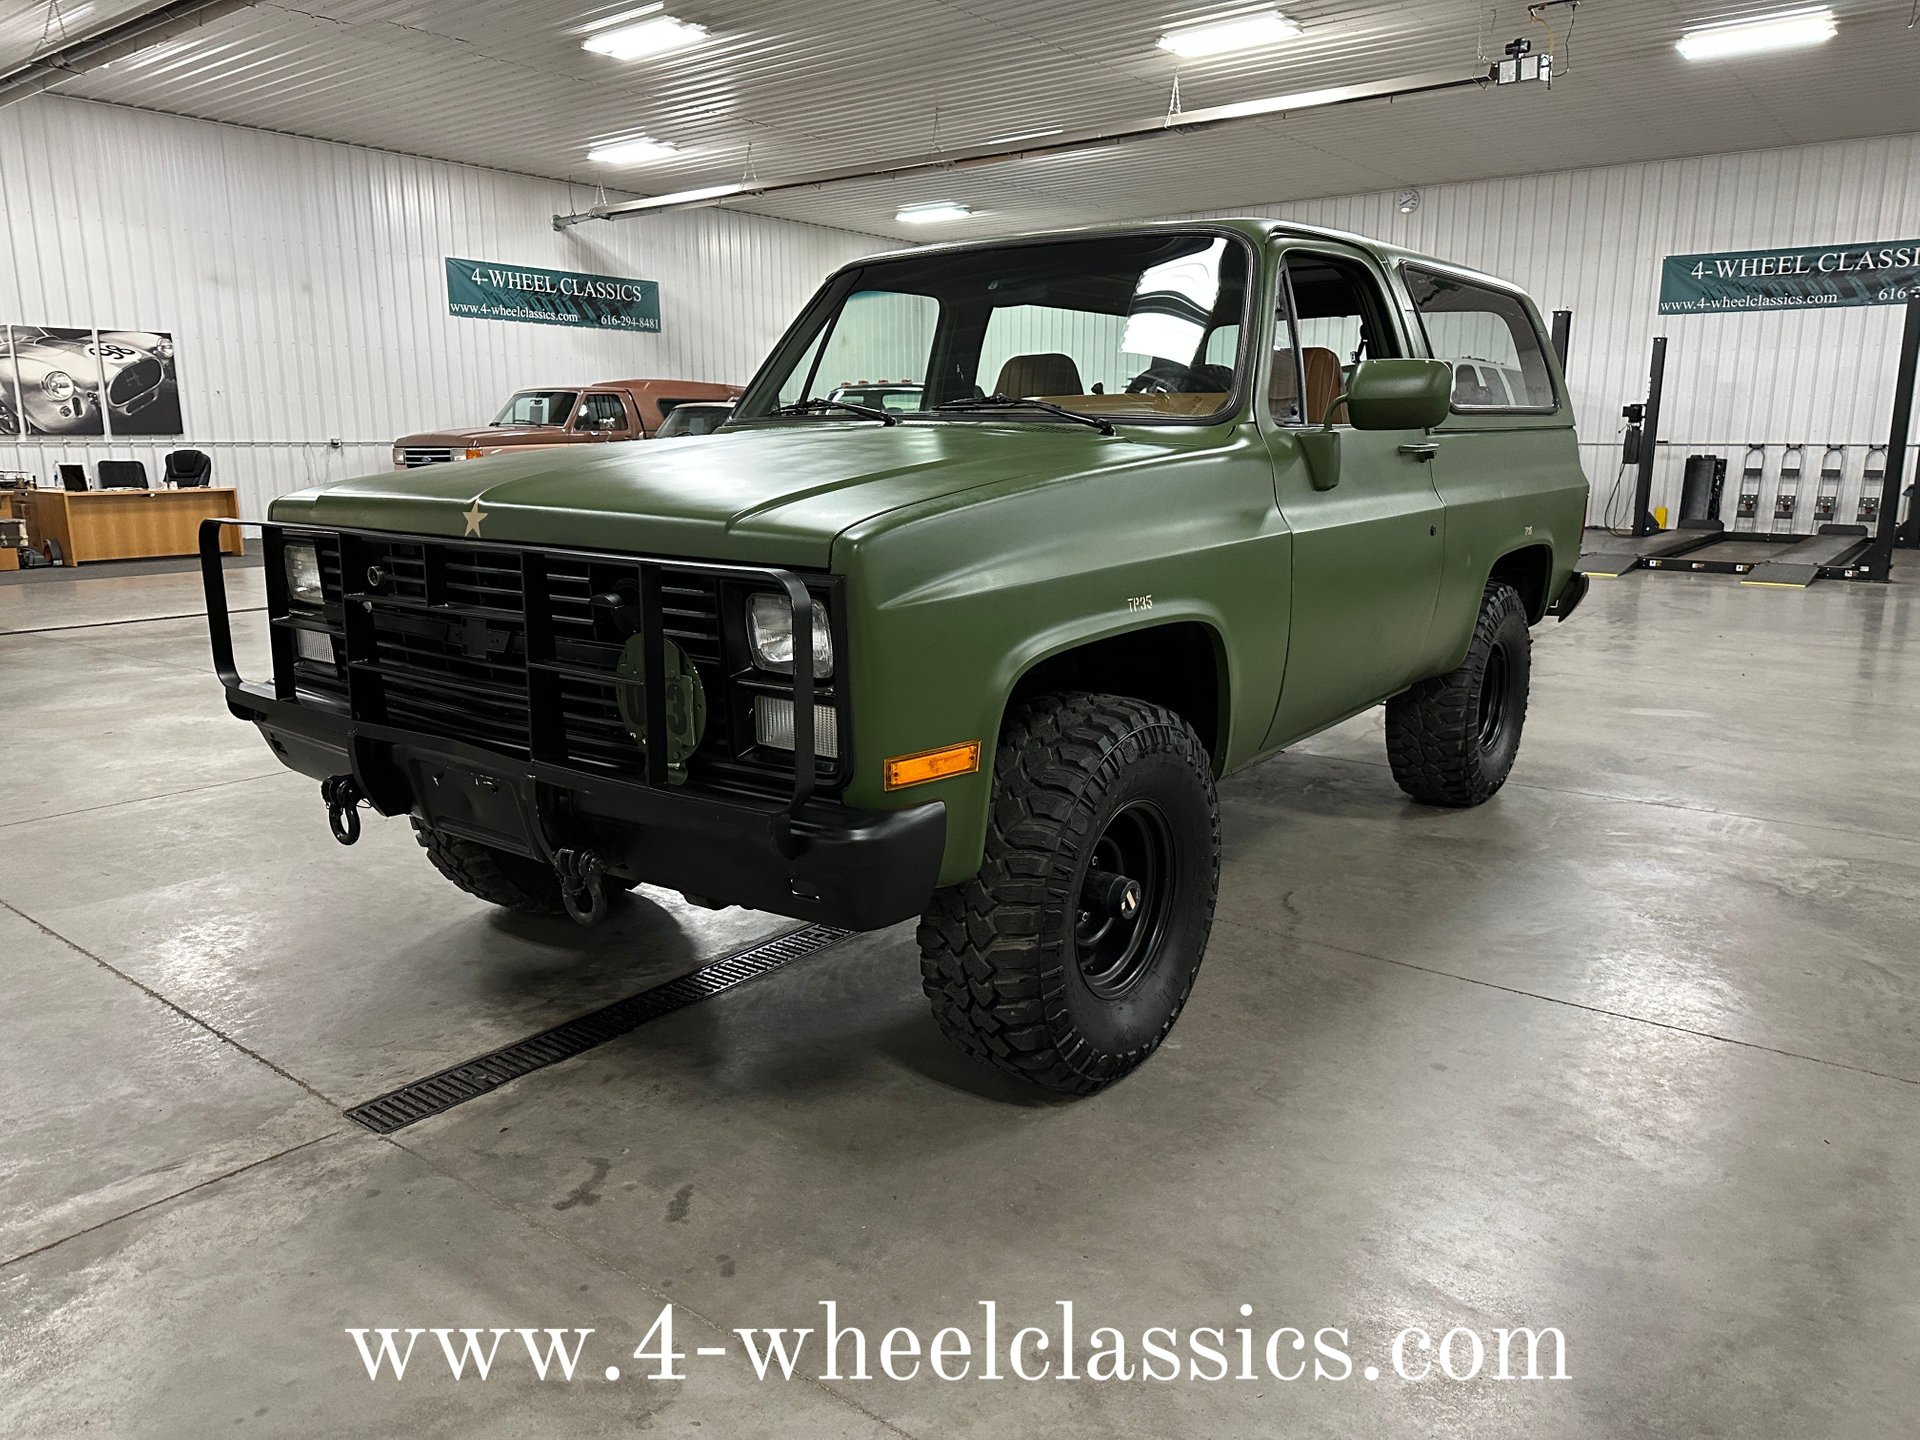 1984 Chevrolet Blazer | 4-Wheel Classics/Classic Car, Truck, and SUV Sales